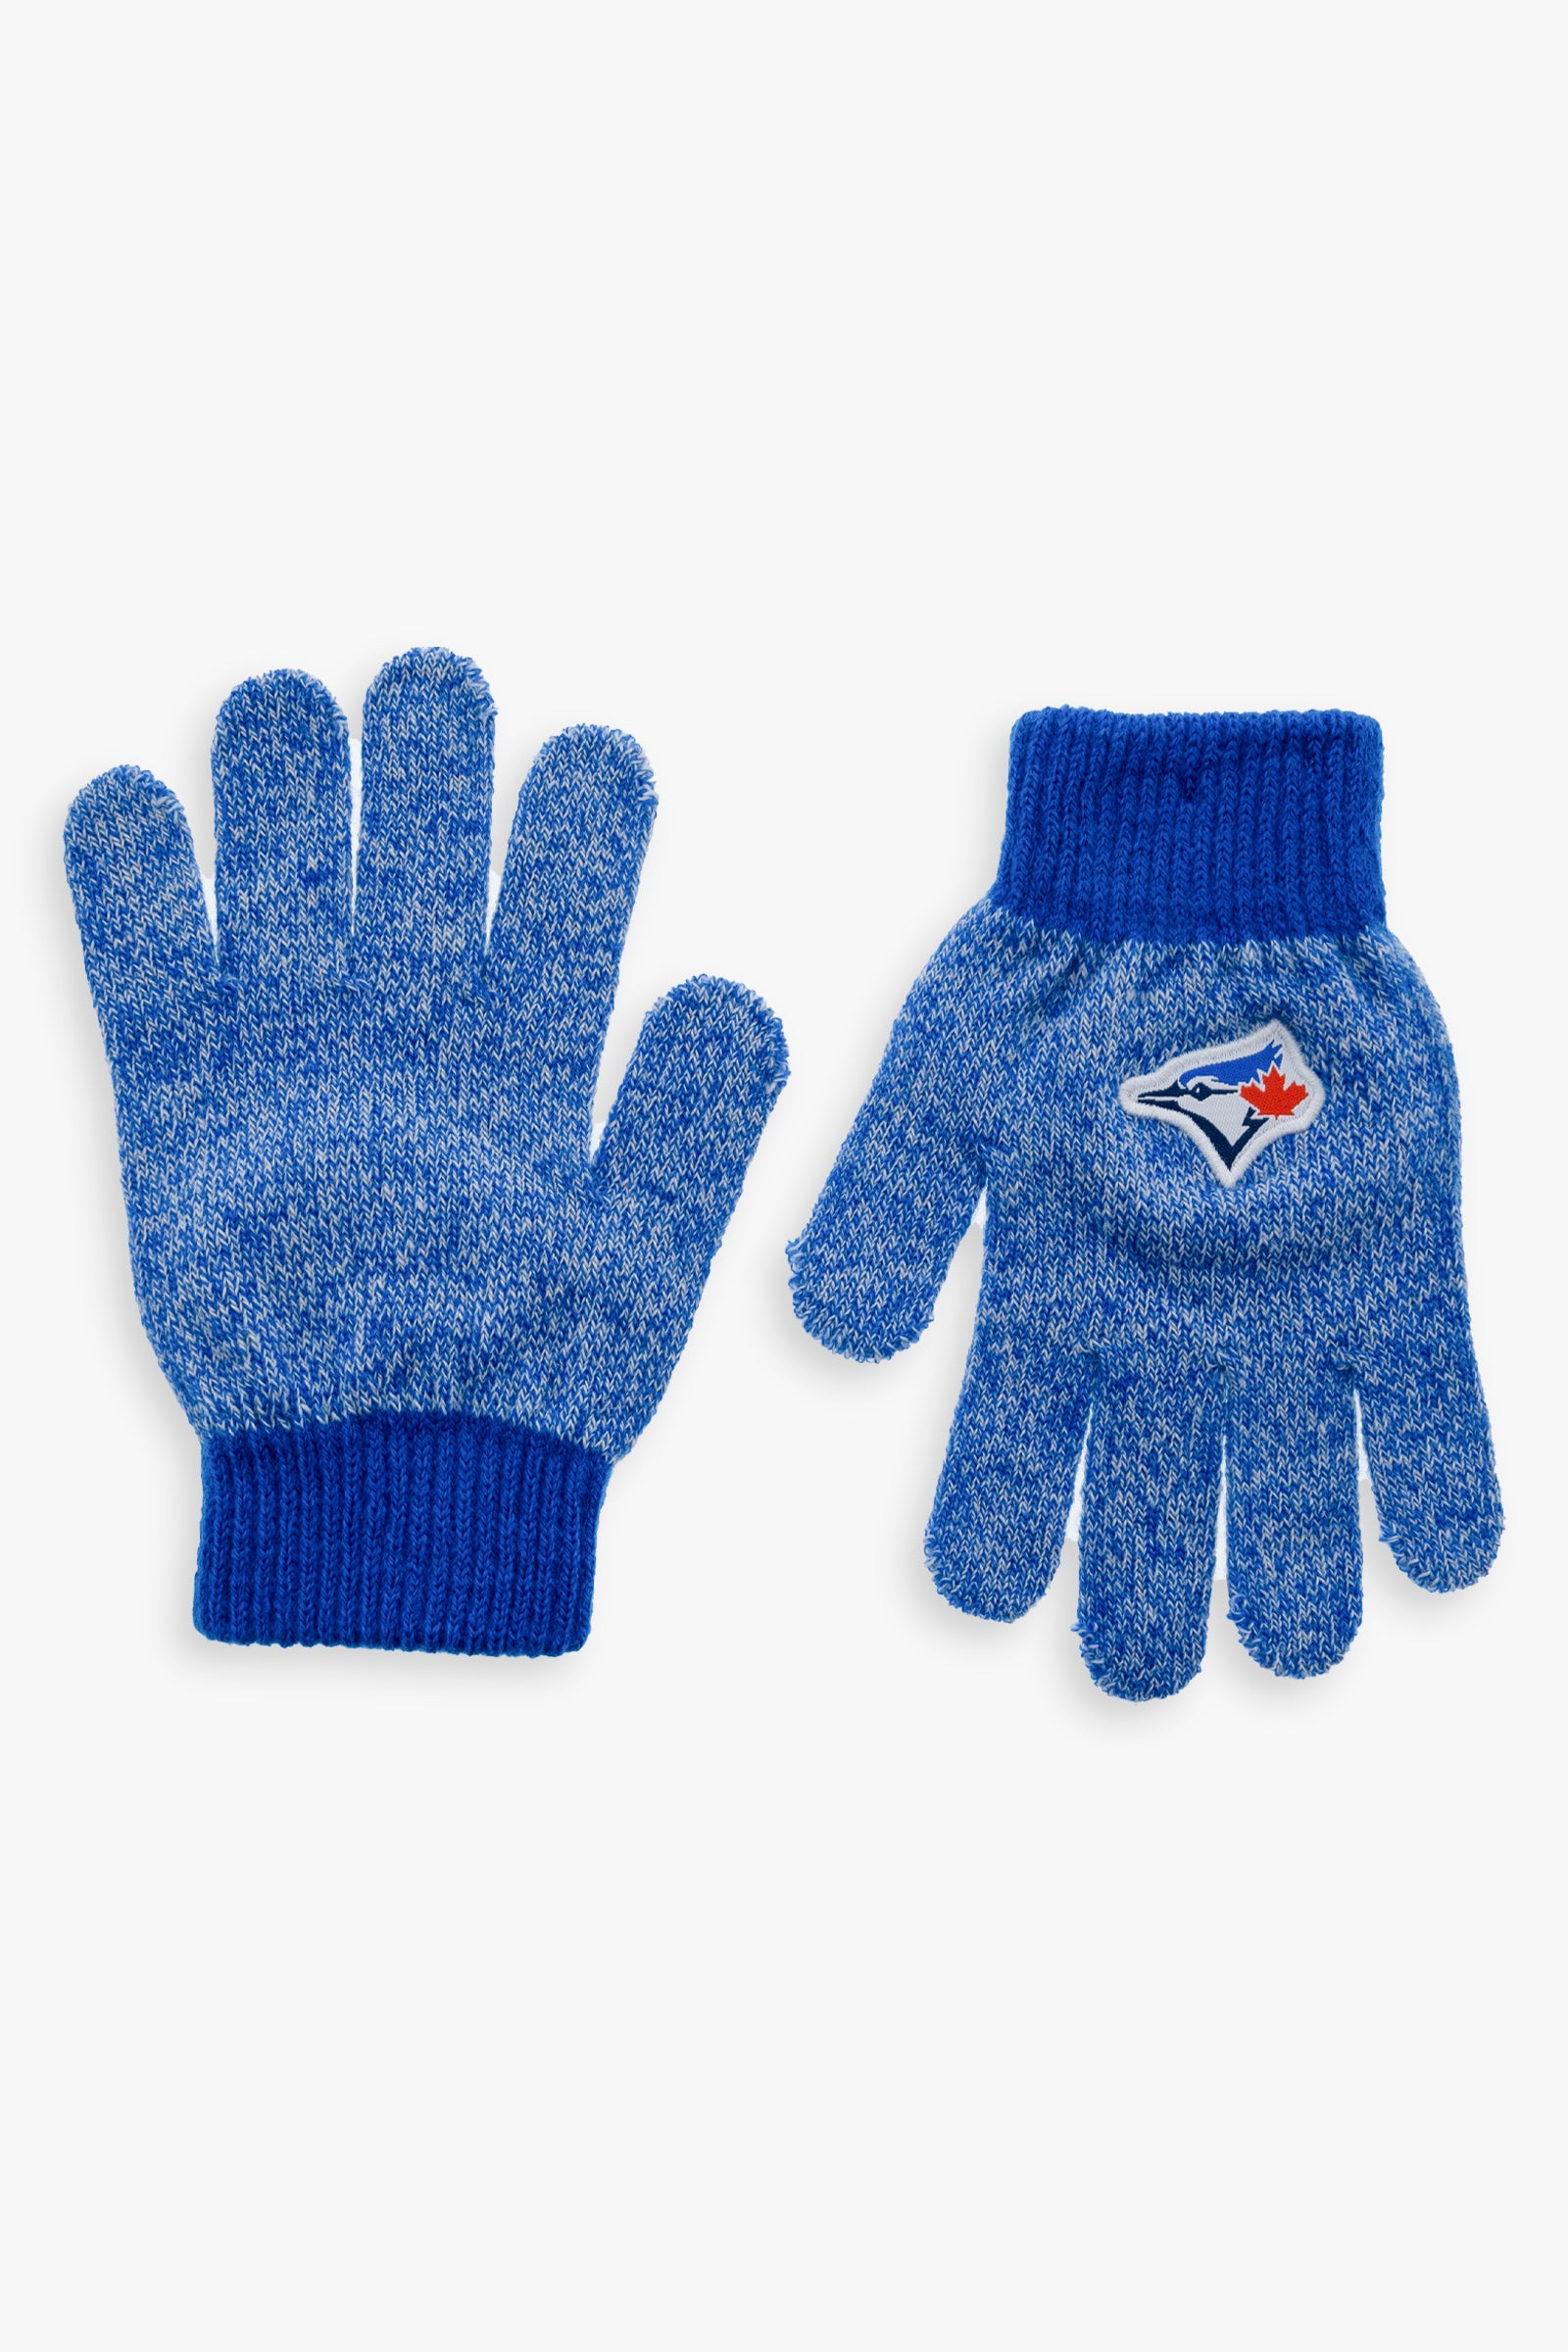 Toronto Blue Jays Youth Boys Winter Hat and Glove Set